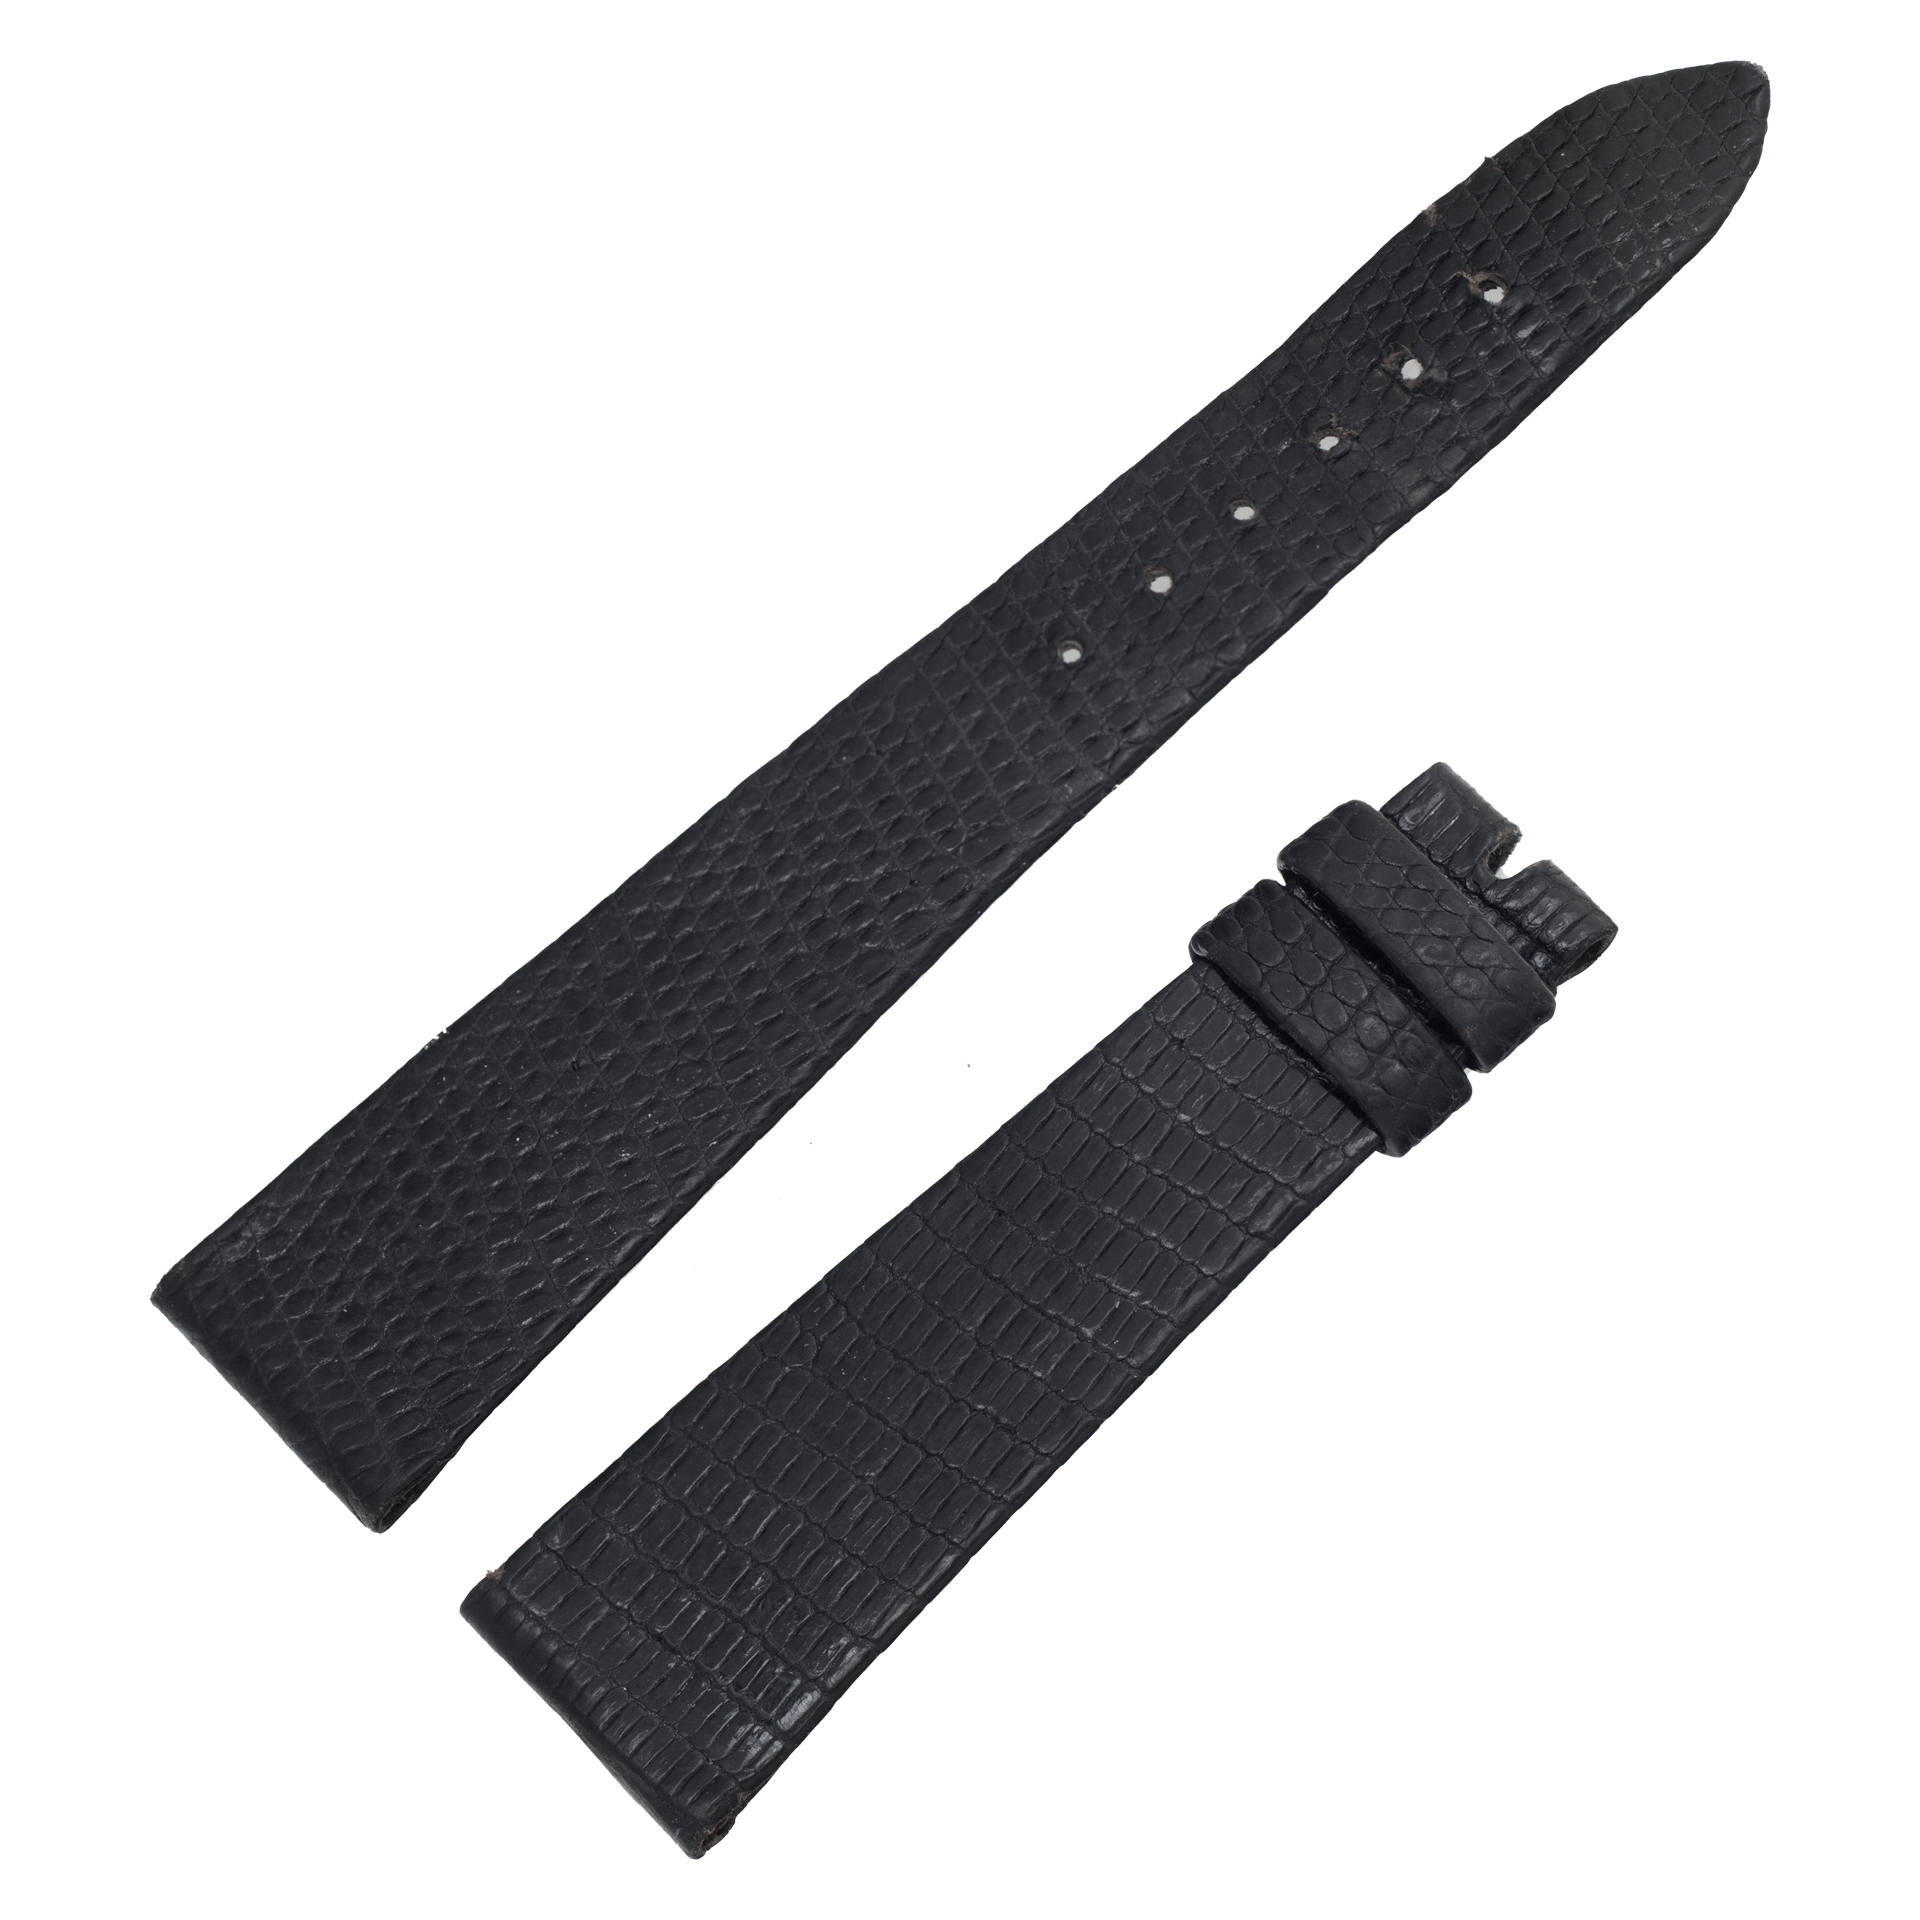 Patek Philippe black satin lizard strap (16mm x 11mm) shop-worn